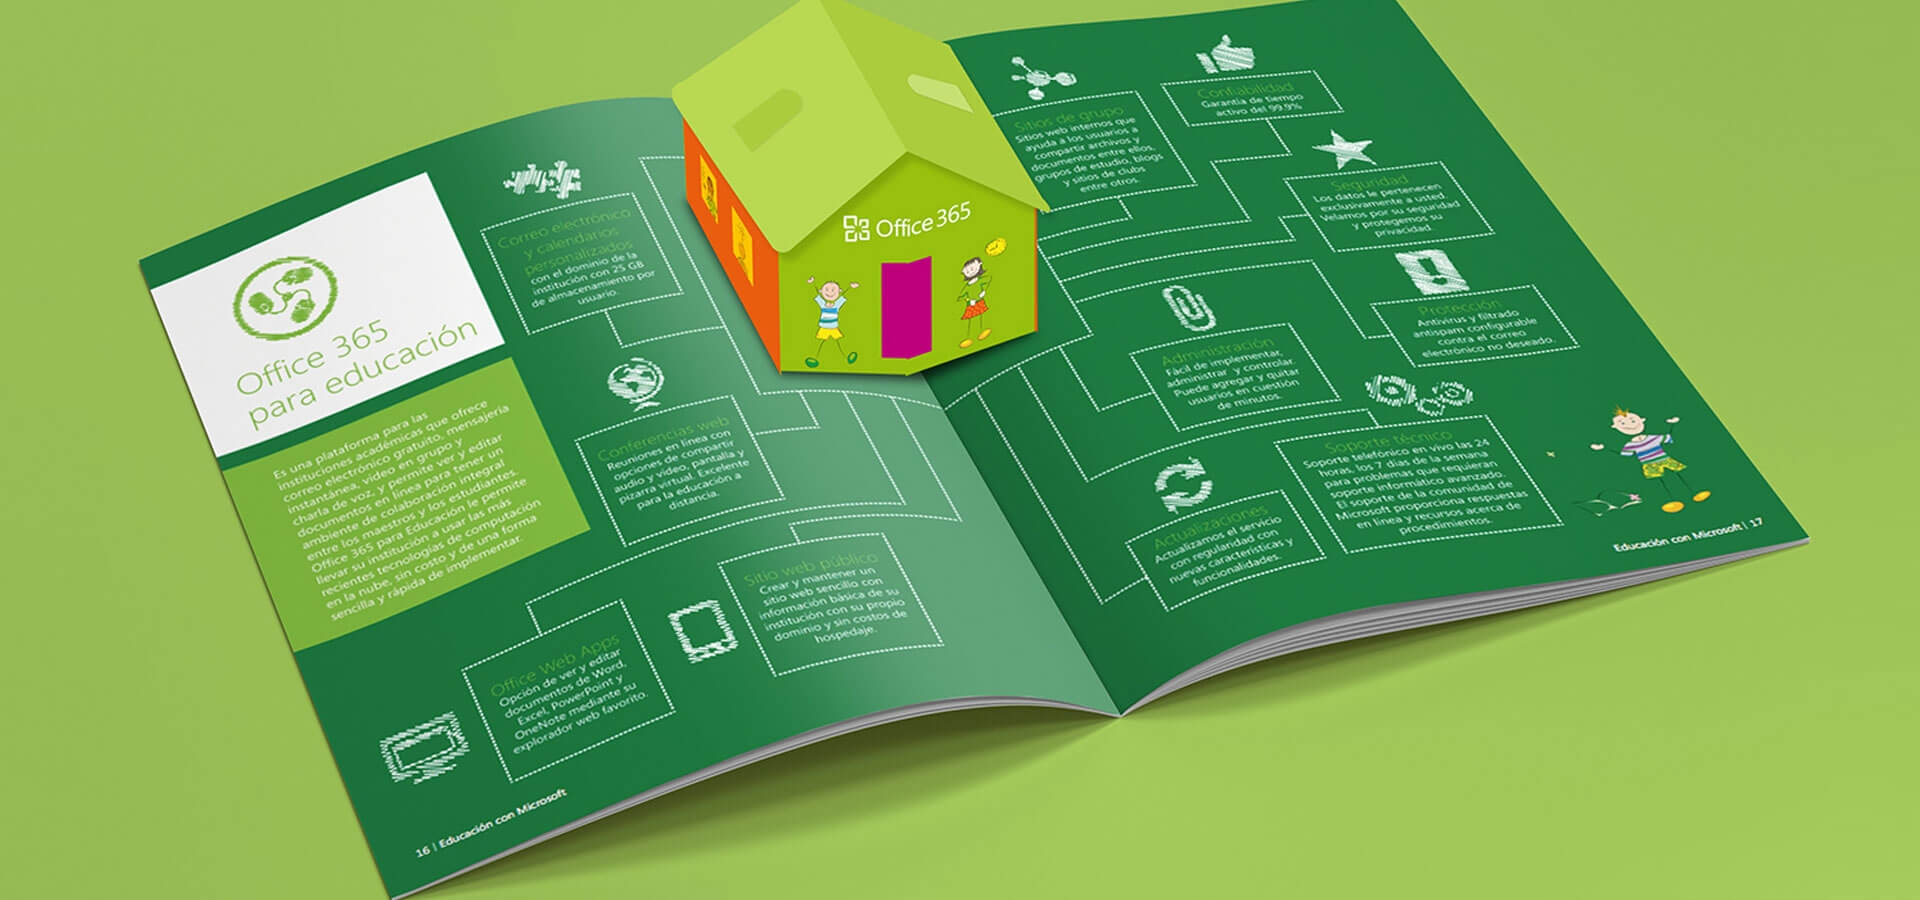 19+ 3D Pop Up Brochure Designs | Free & Premium Templates Regarding Pop Up Brochure Template